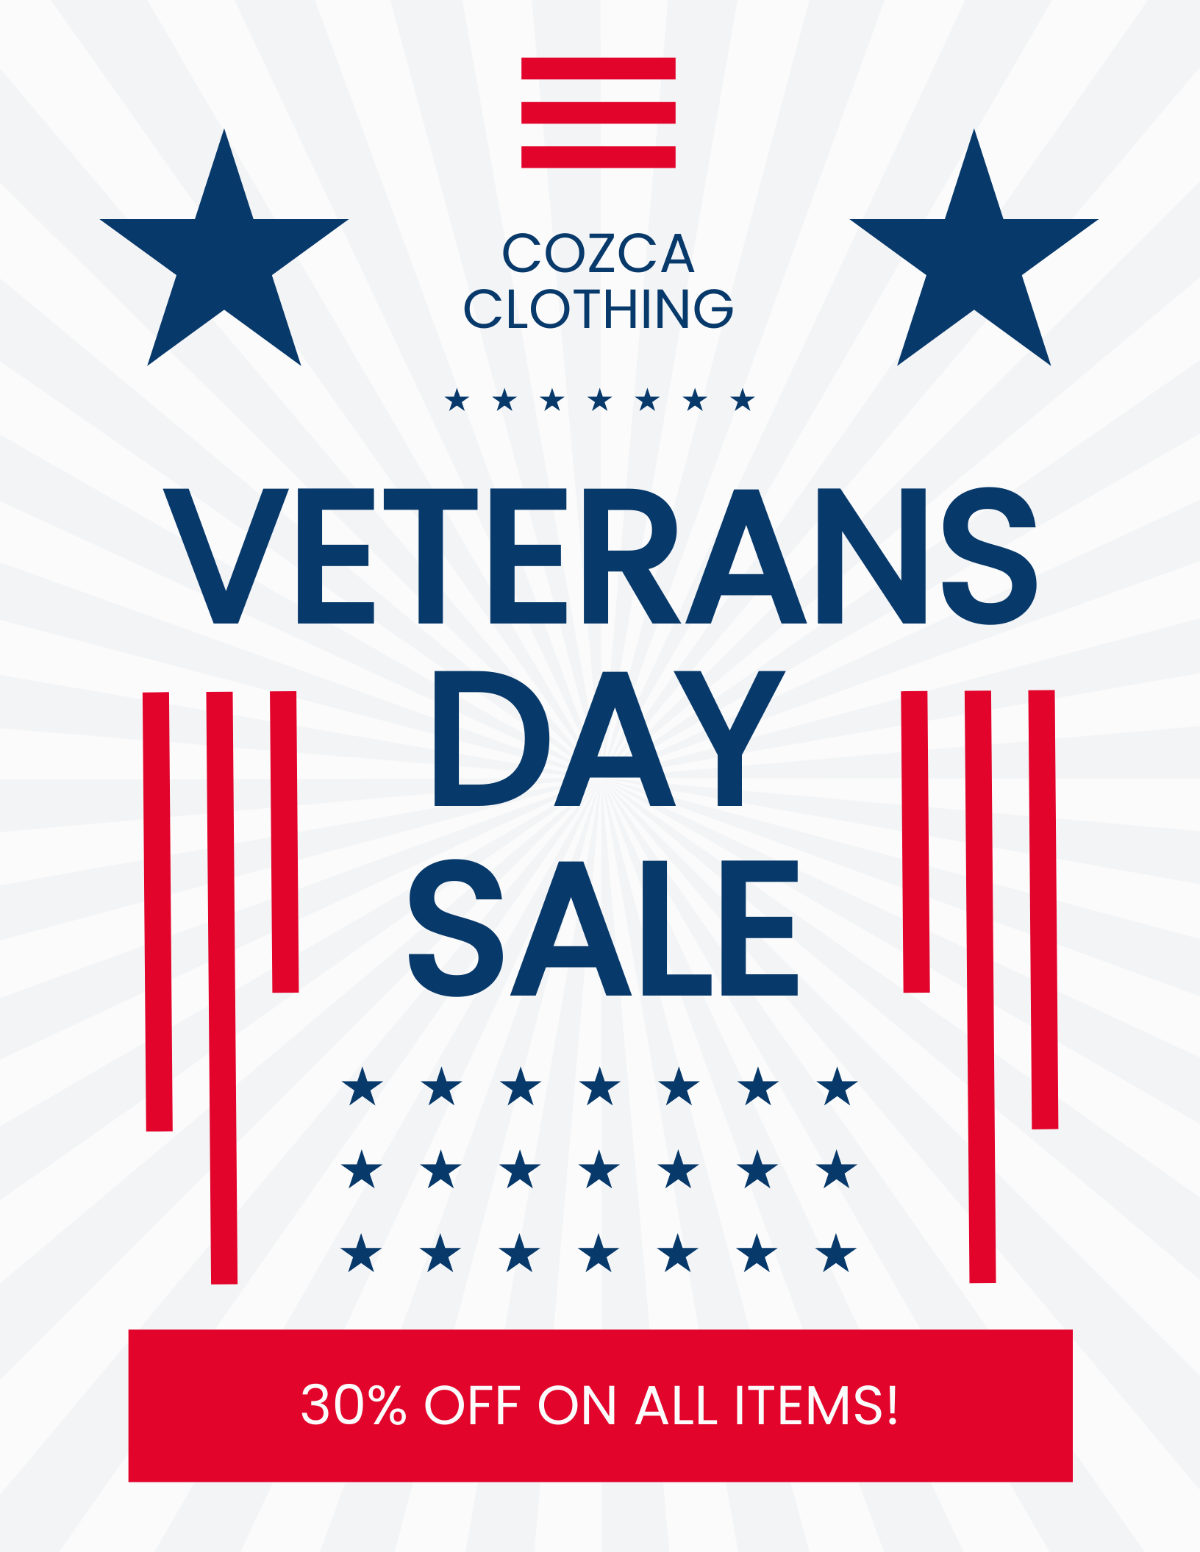 Veterans Day Sale Flyer Template